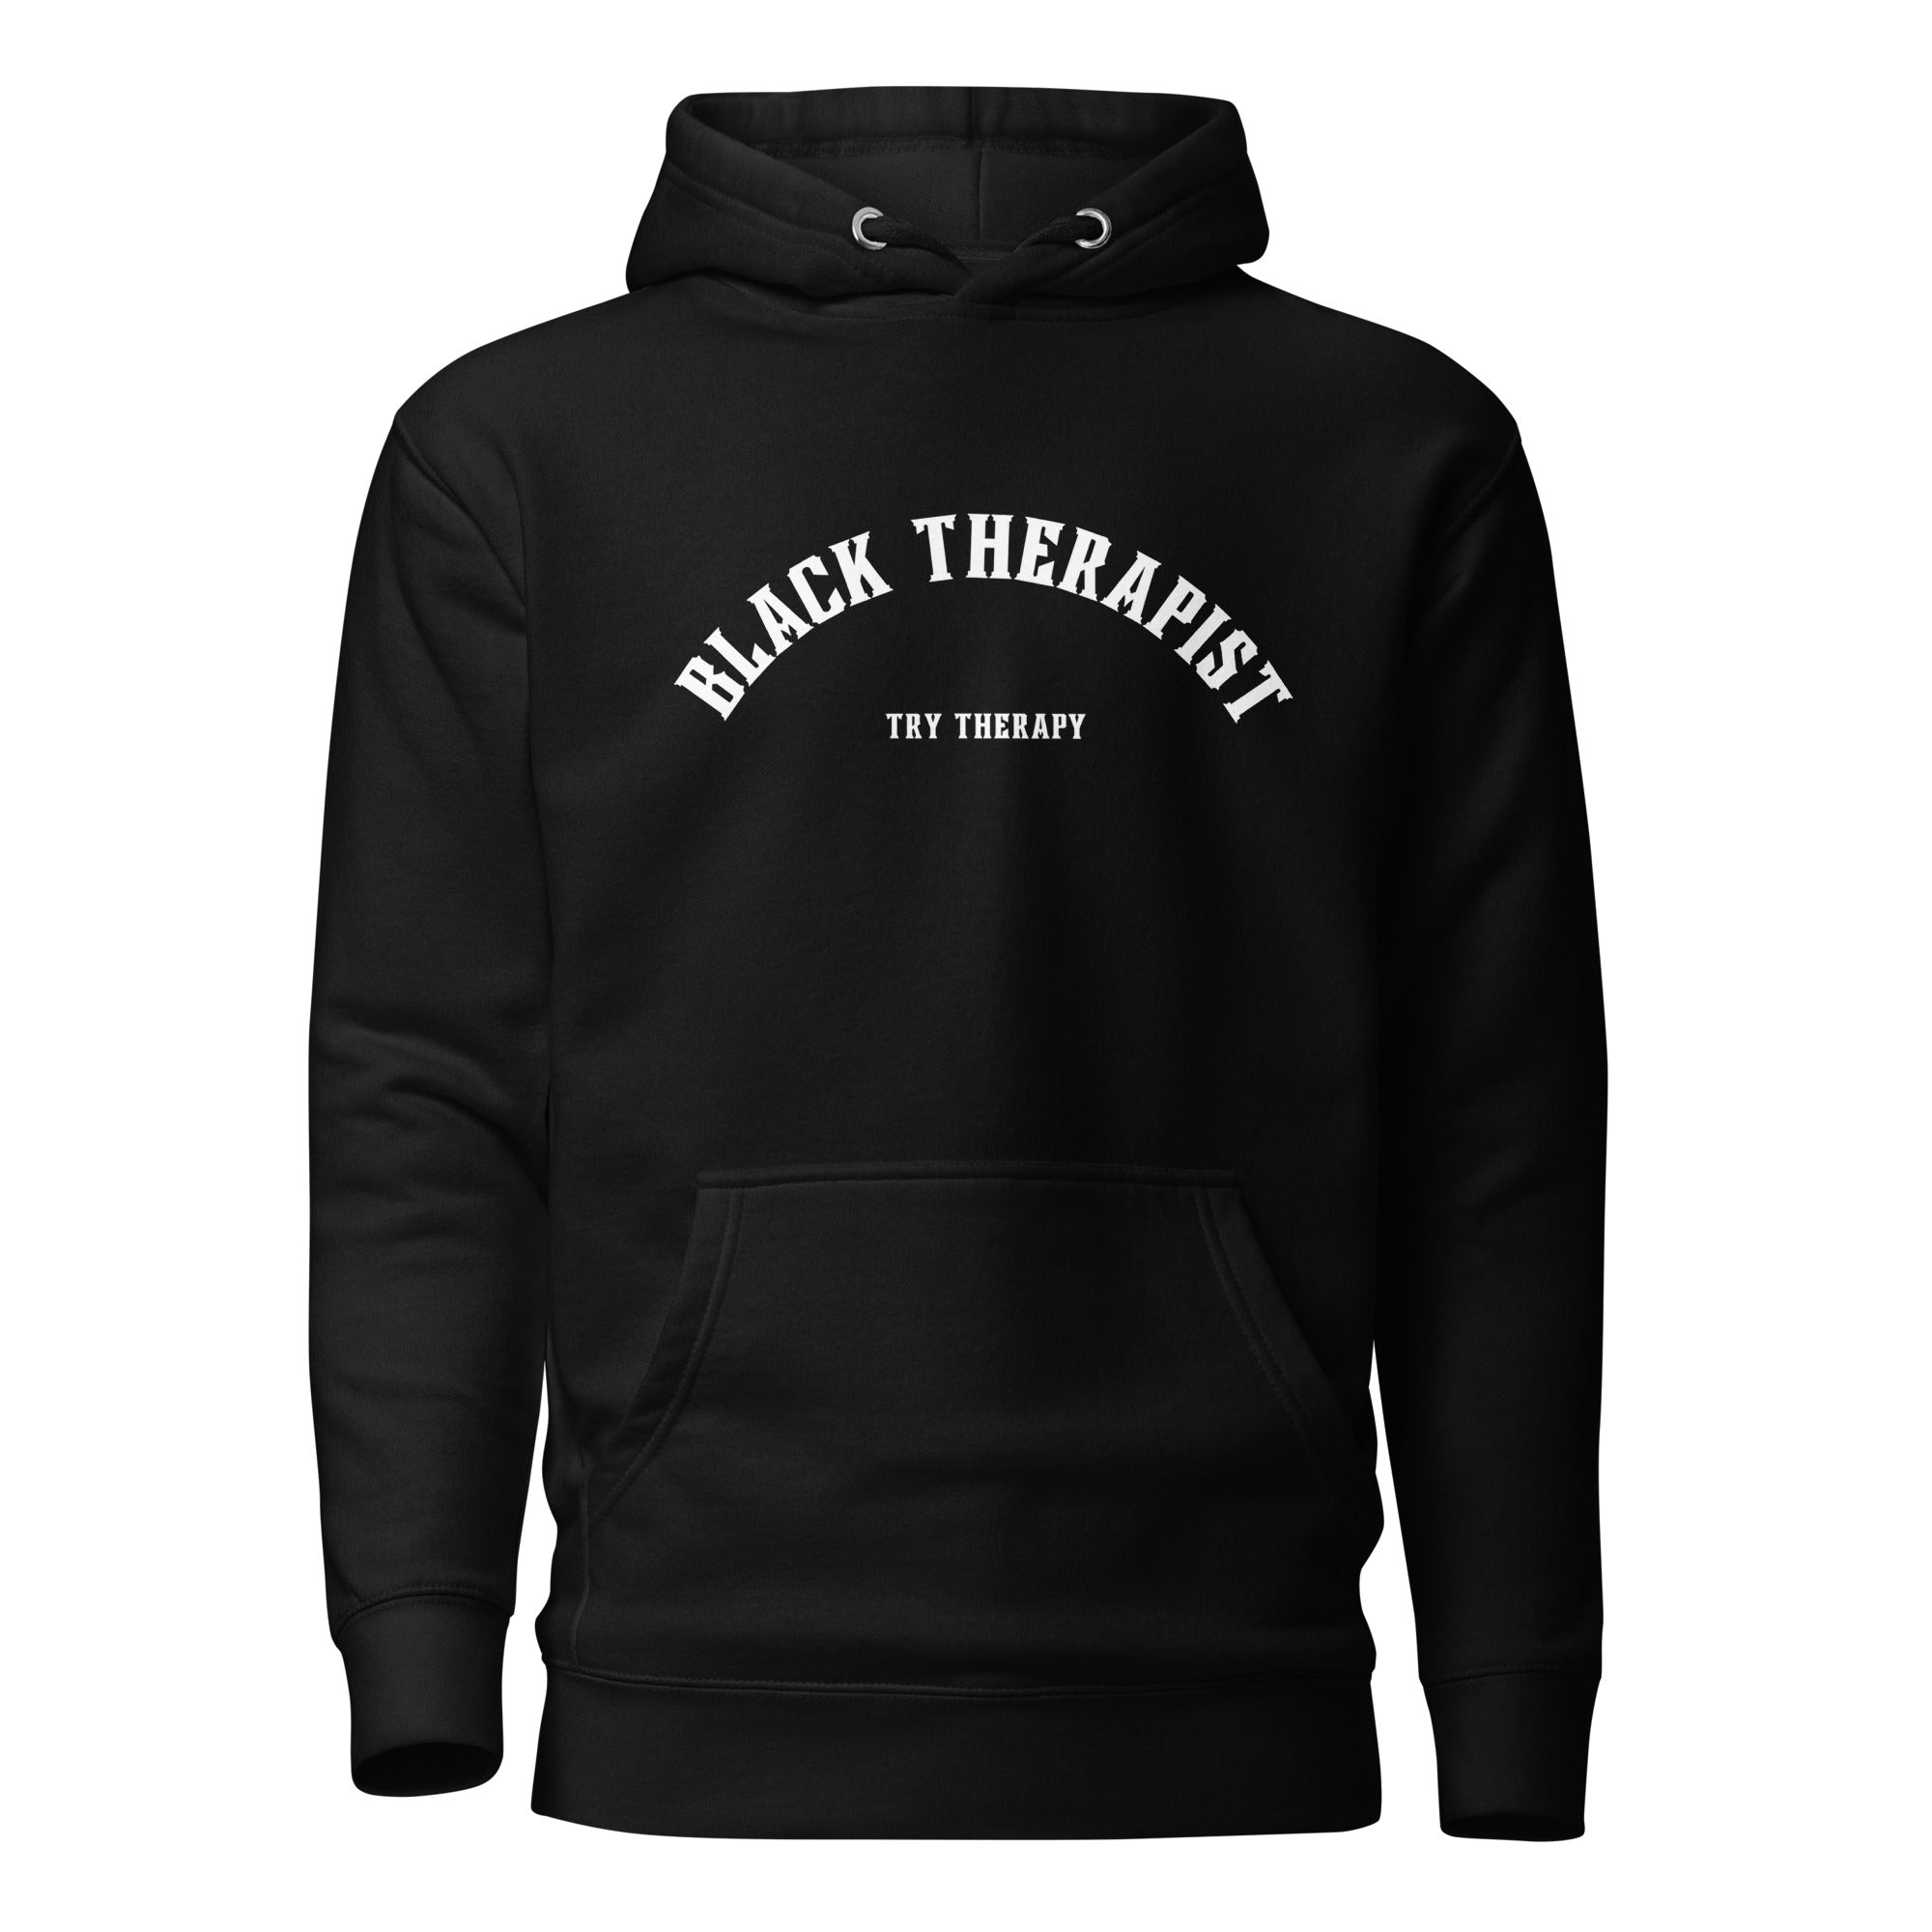 BP Black Therapist Plain Sweatsuit Set - Premium Hoodie